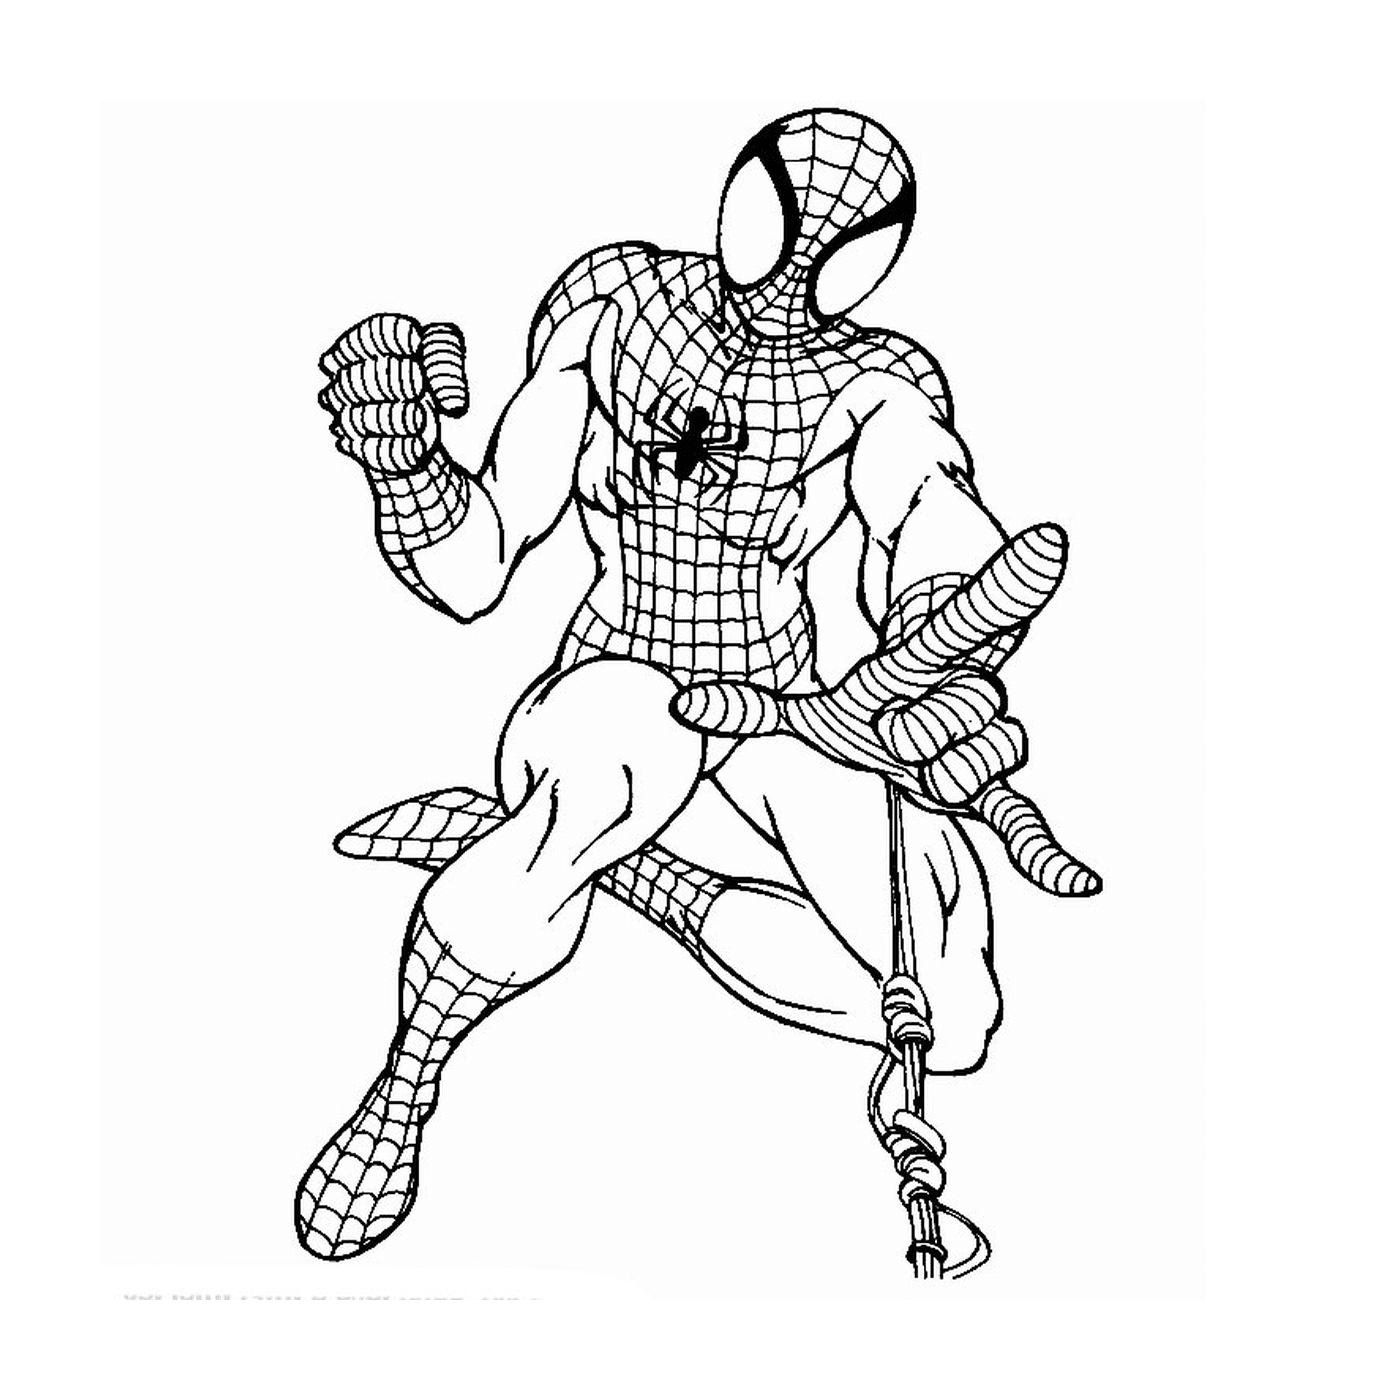  Spiderman of Marvel comics 